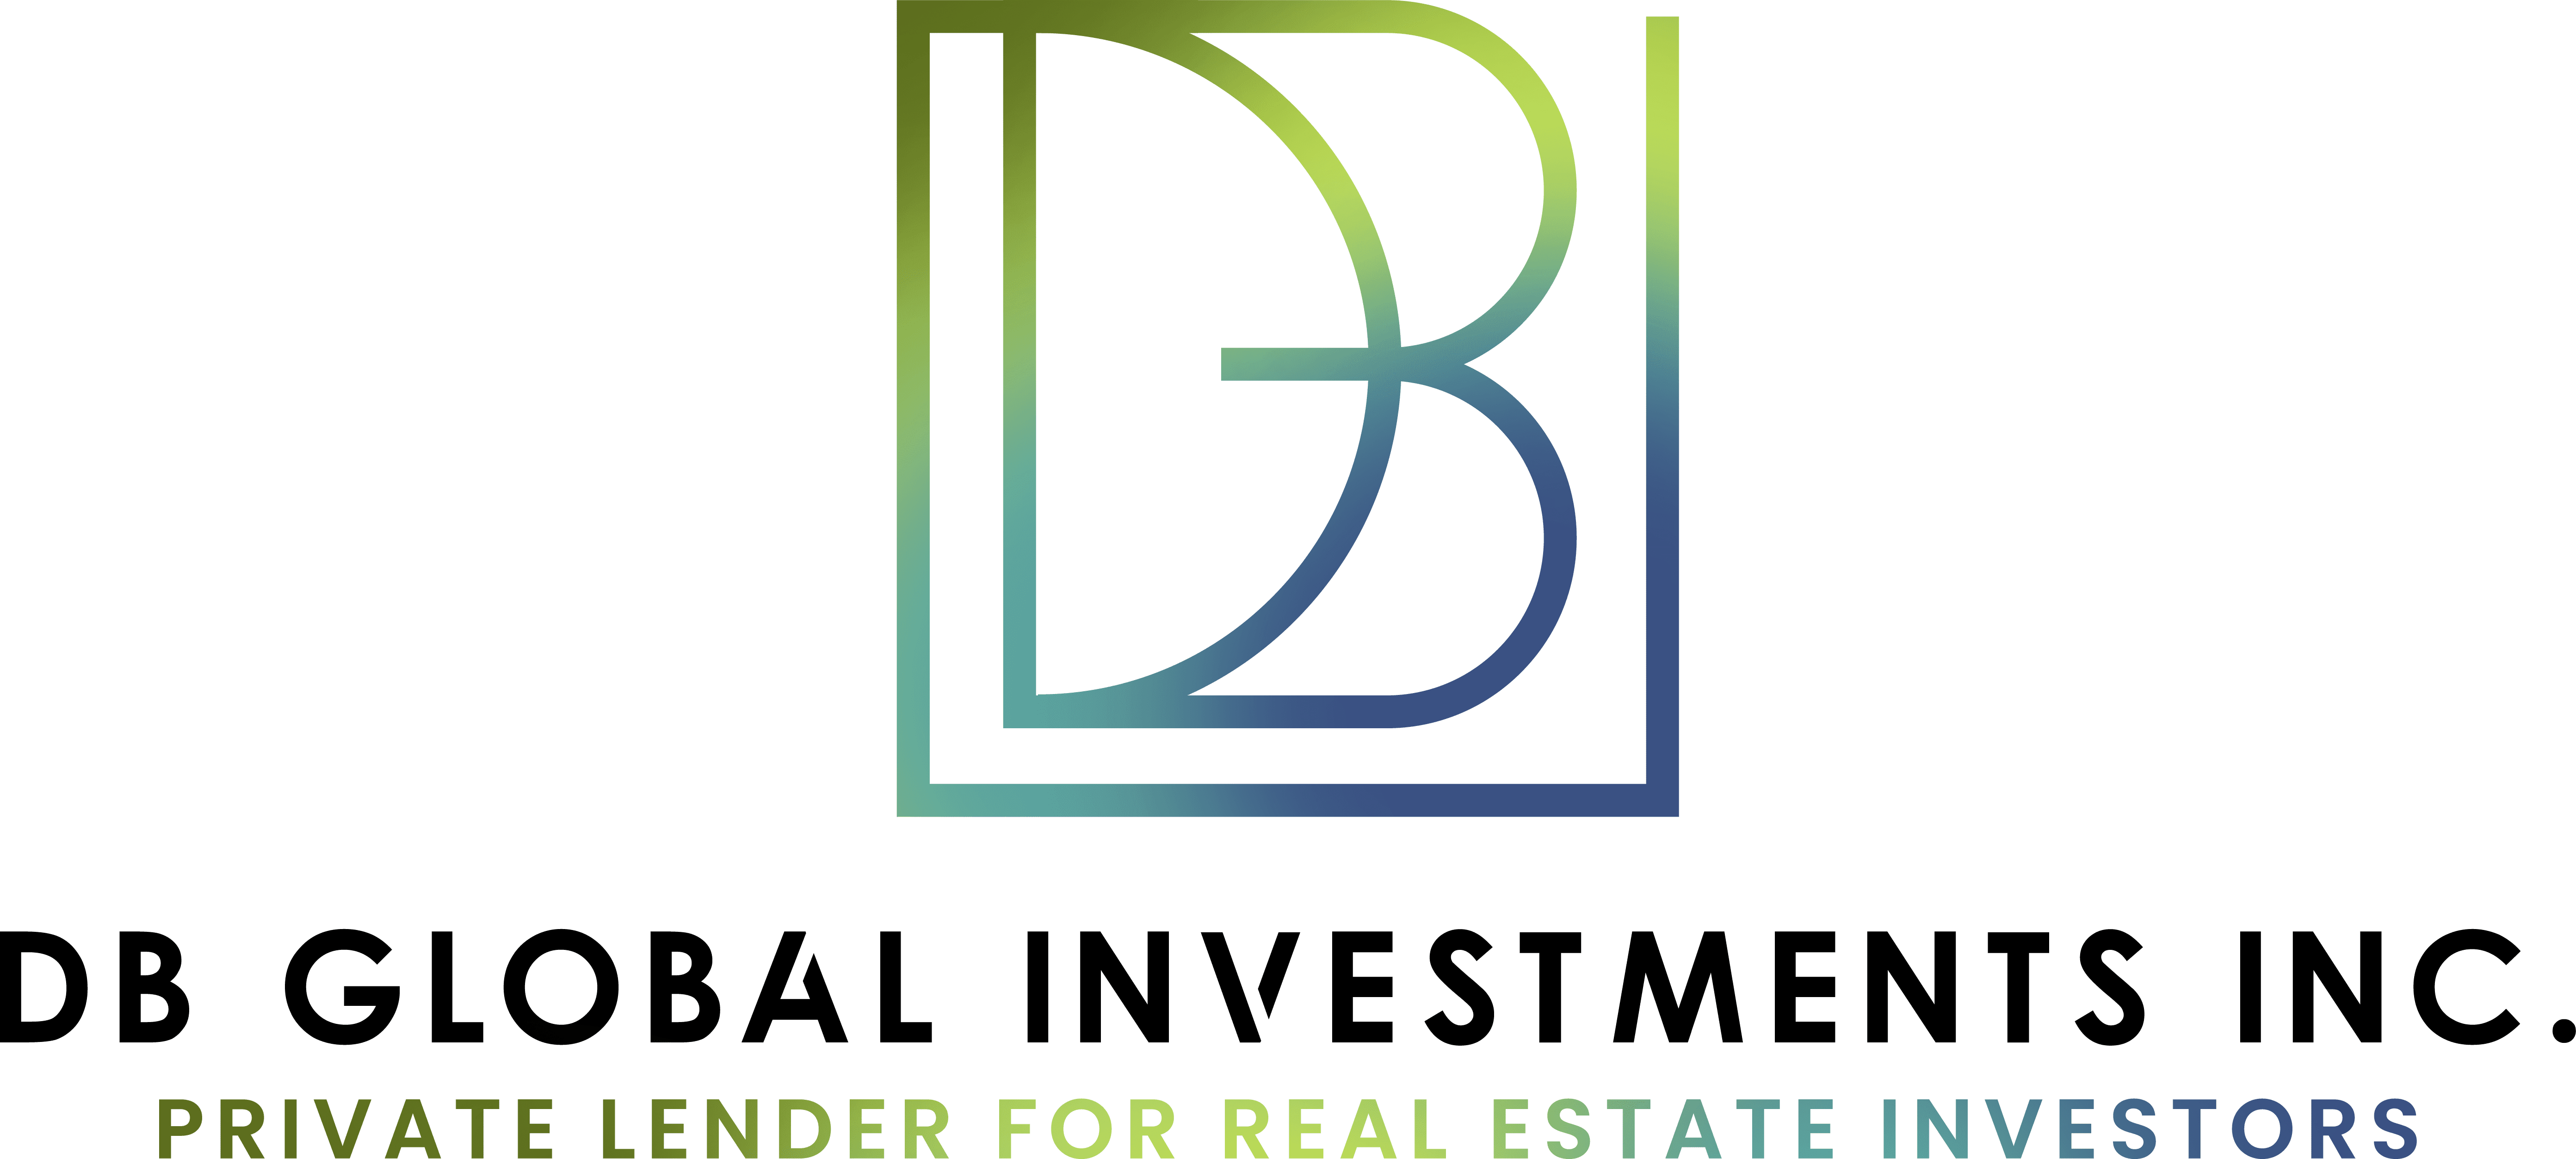 DB Global Investments Inc. Logo